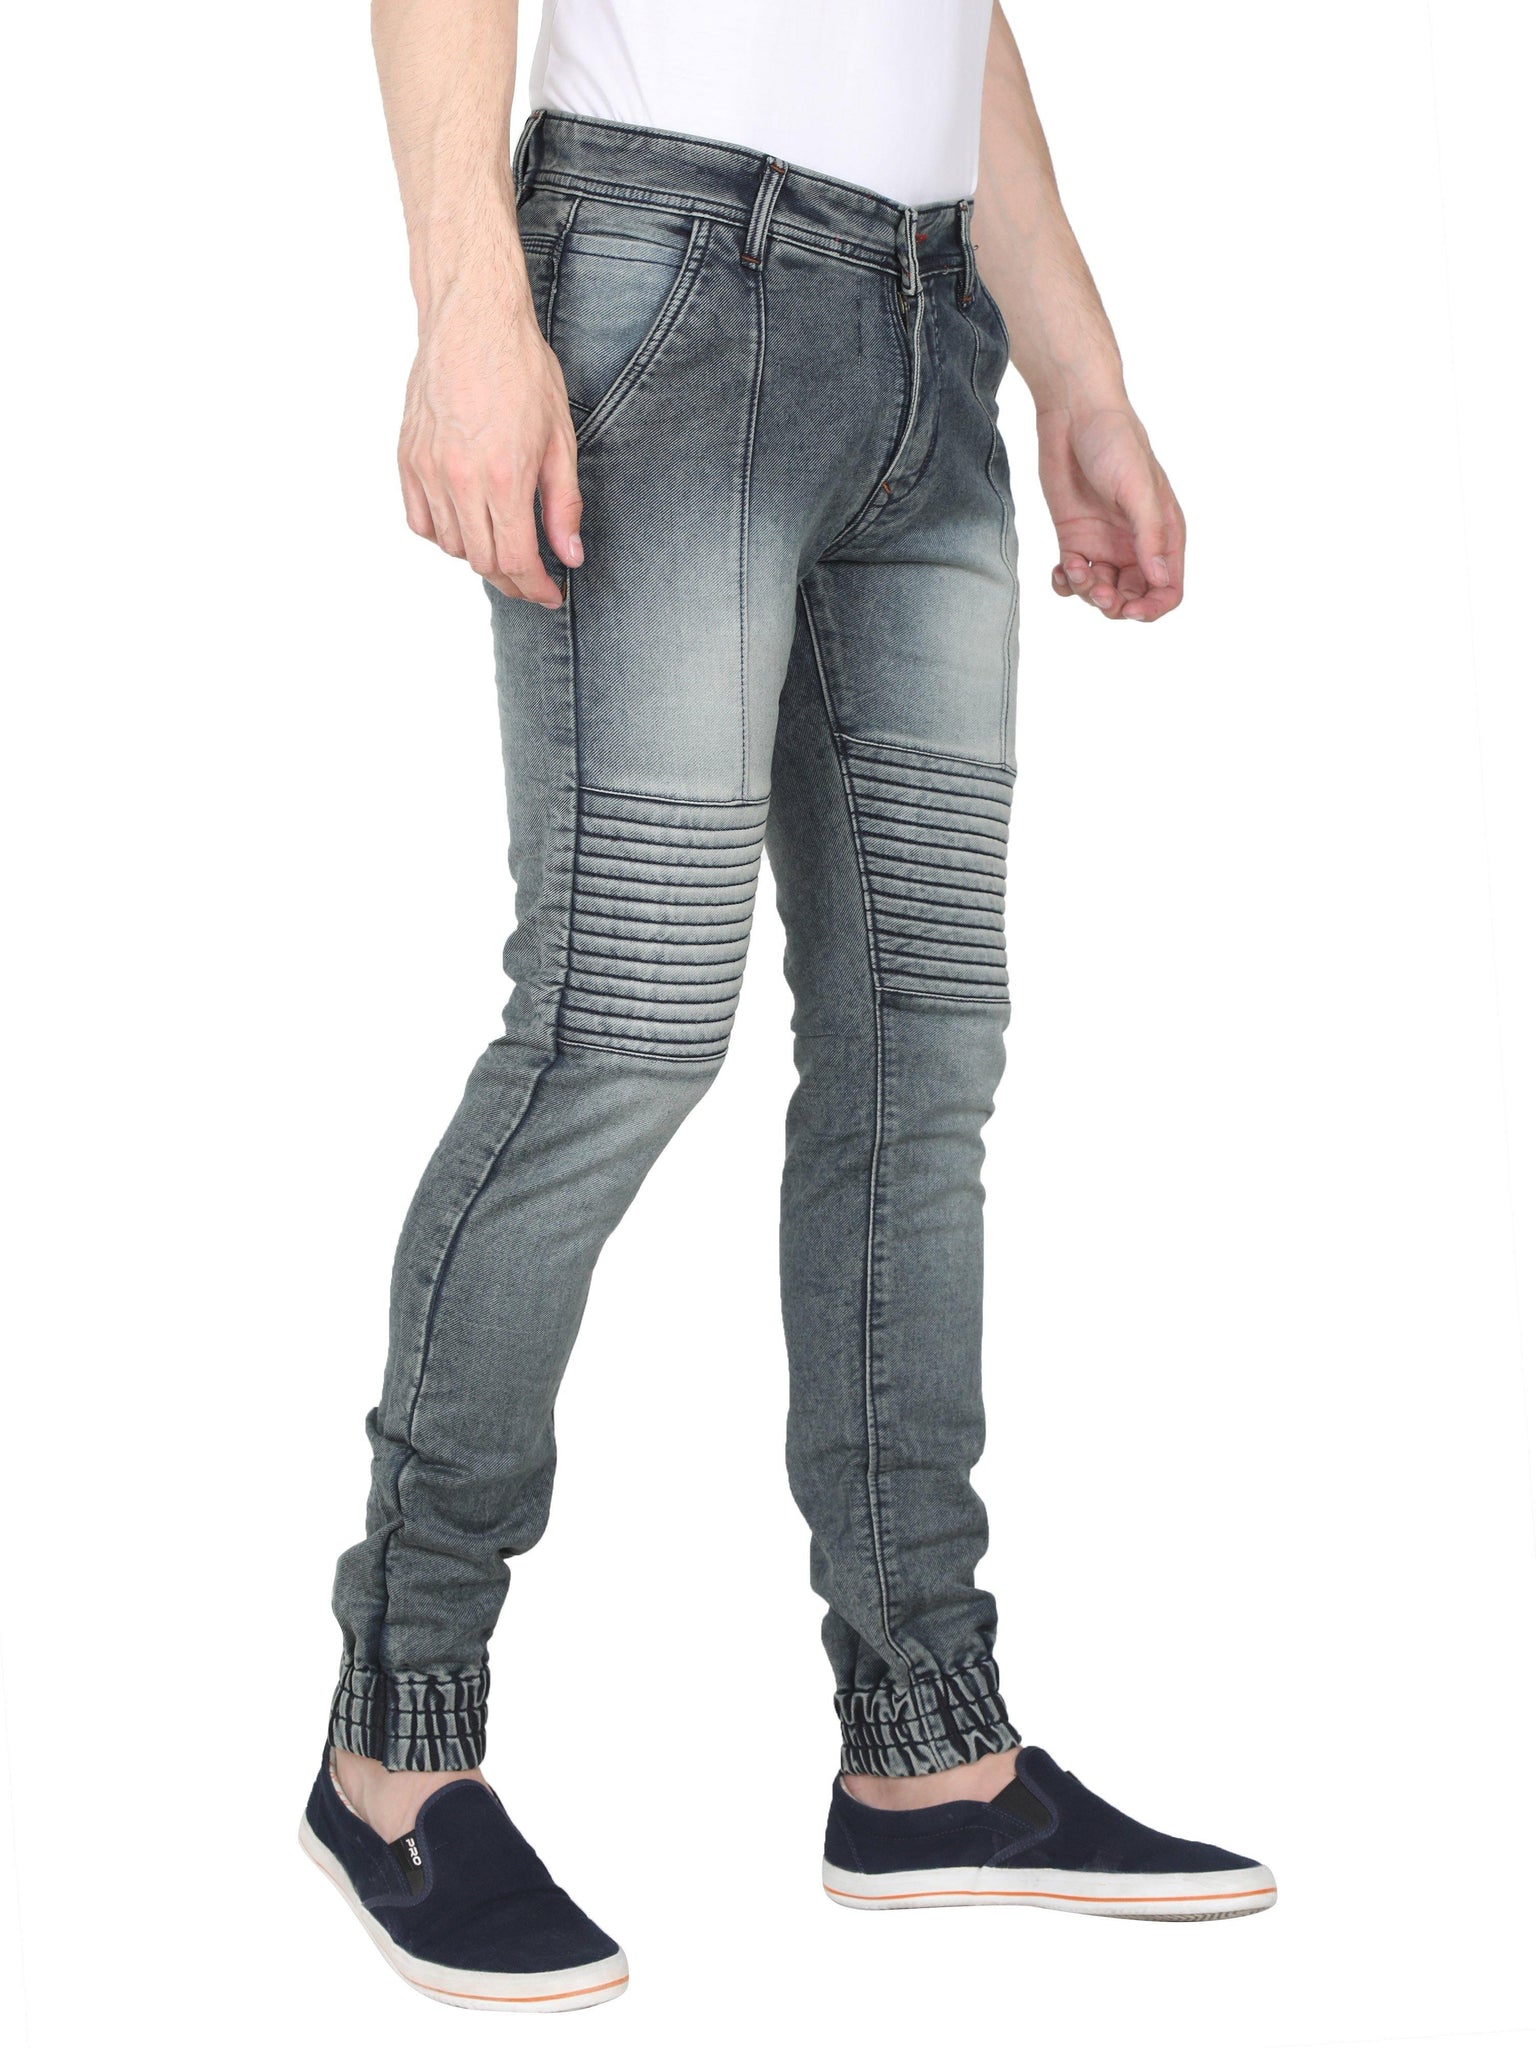 Buy Light Grey Denim Jeans for Men at Best Price – GOOSEBERY